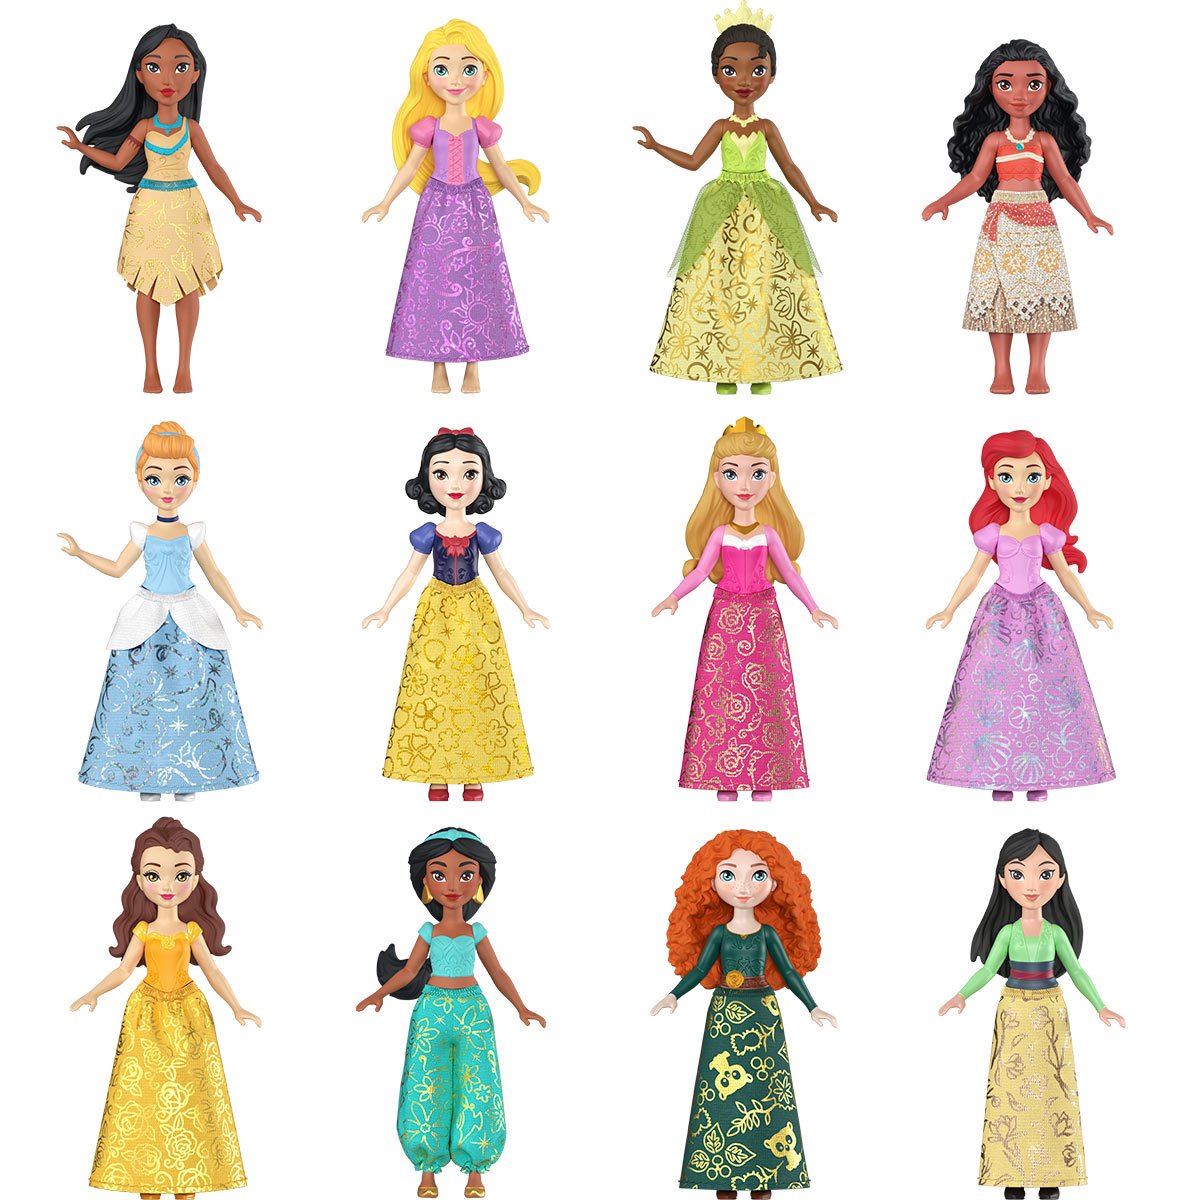 Mini Princesas Disney